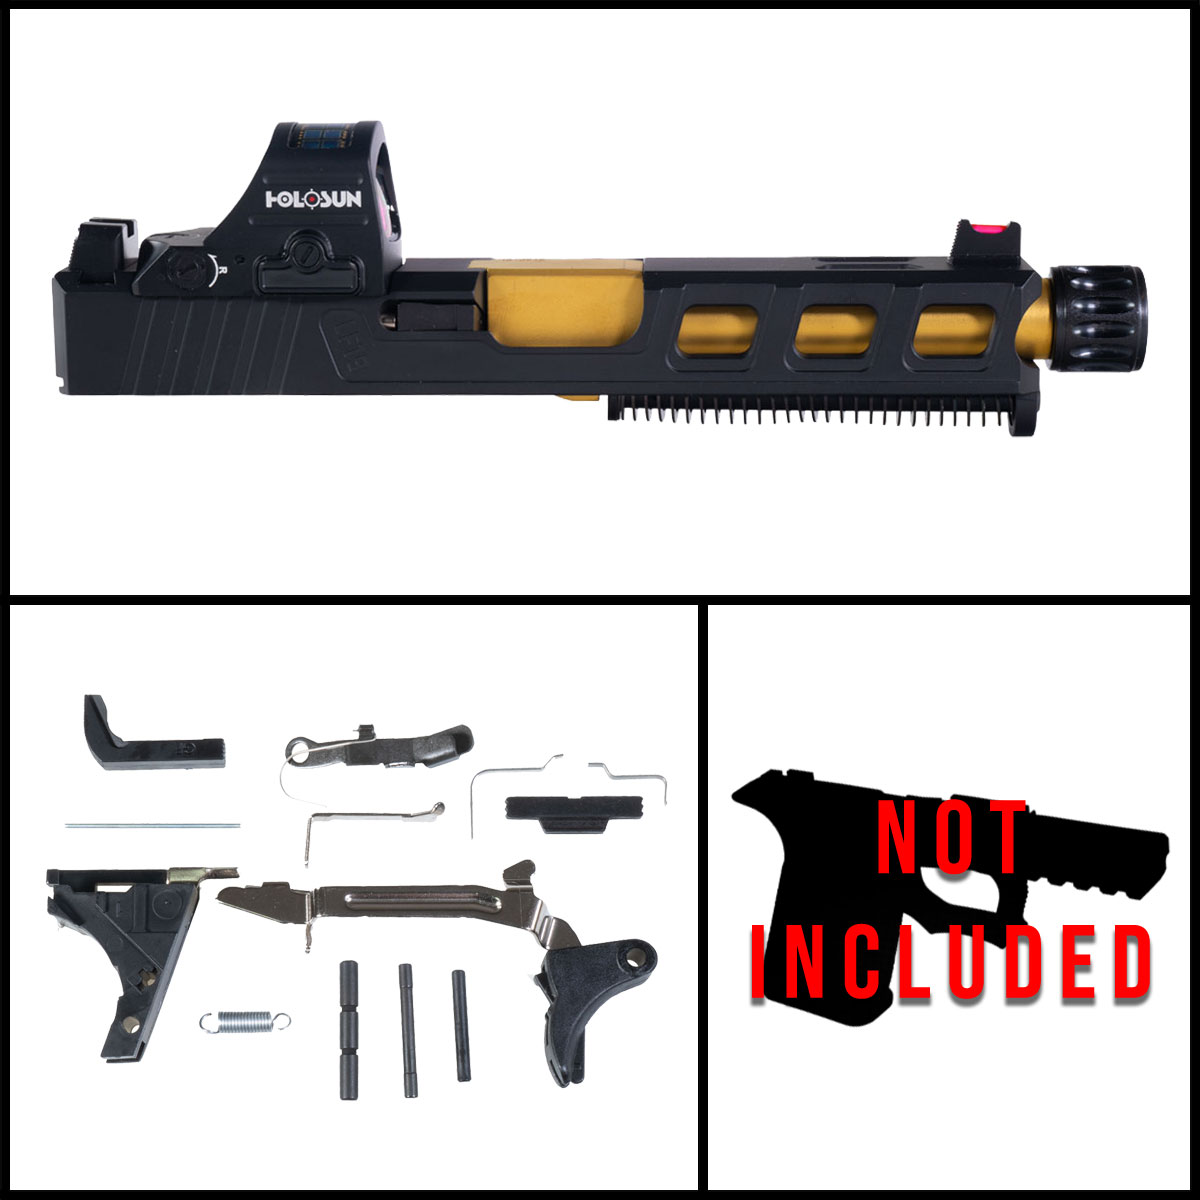 MMC 'Cui Bono? w/ HS507C-X2 Red Dot' 9mm Full Pistol Build Kit (Everything Minus Frame) - Glock 19 Gen 1-3 Compatible